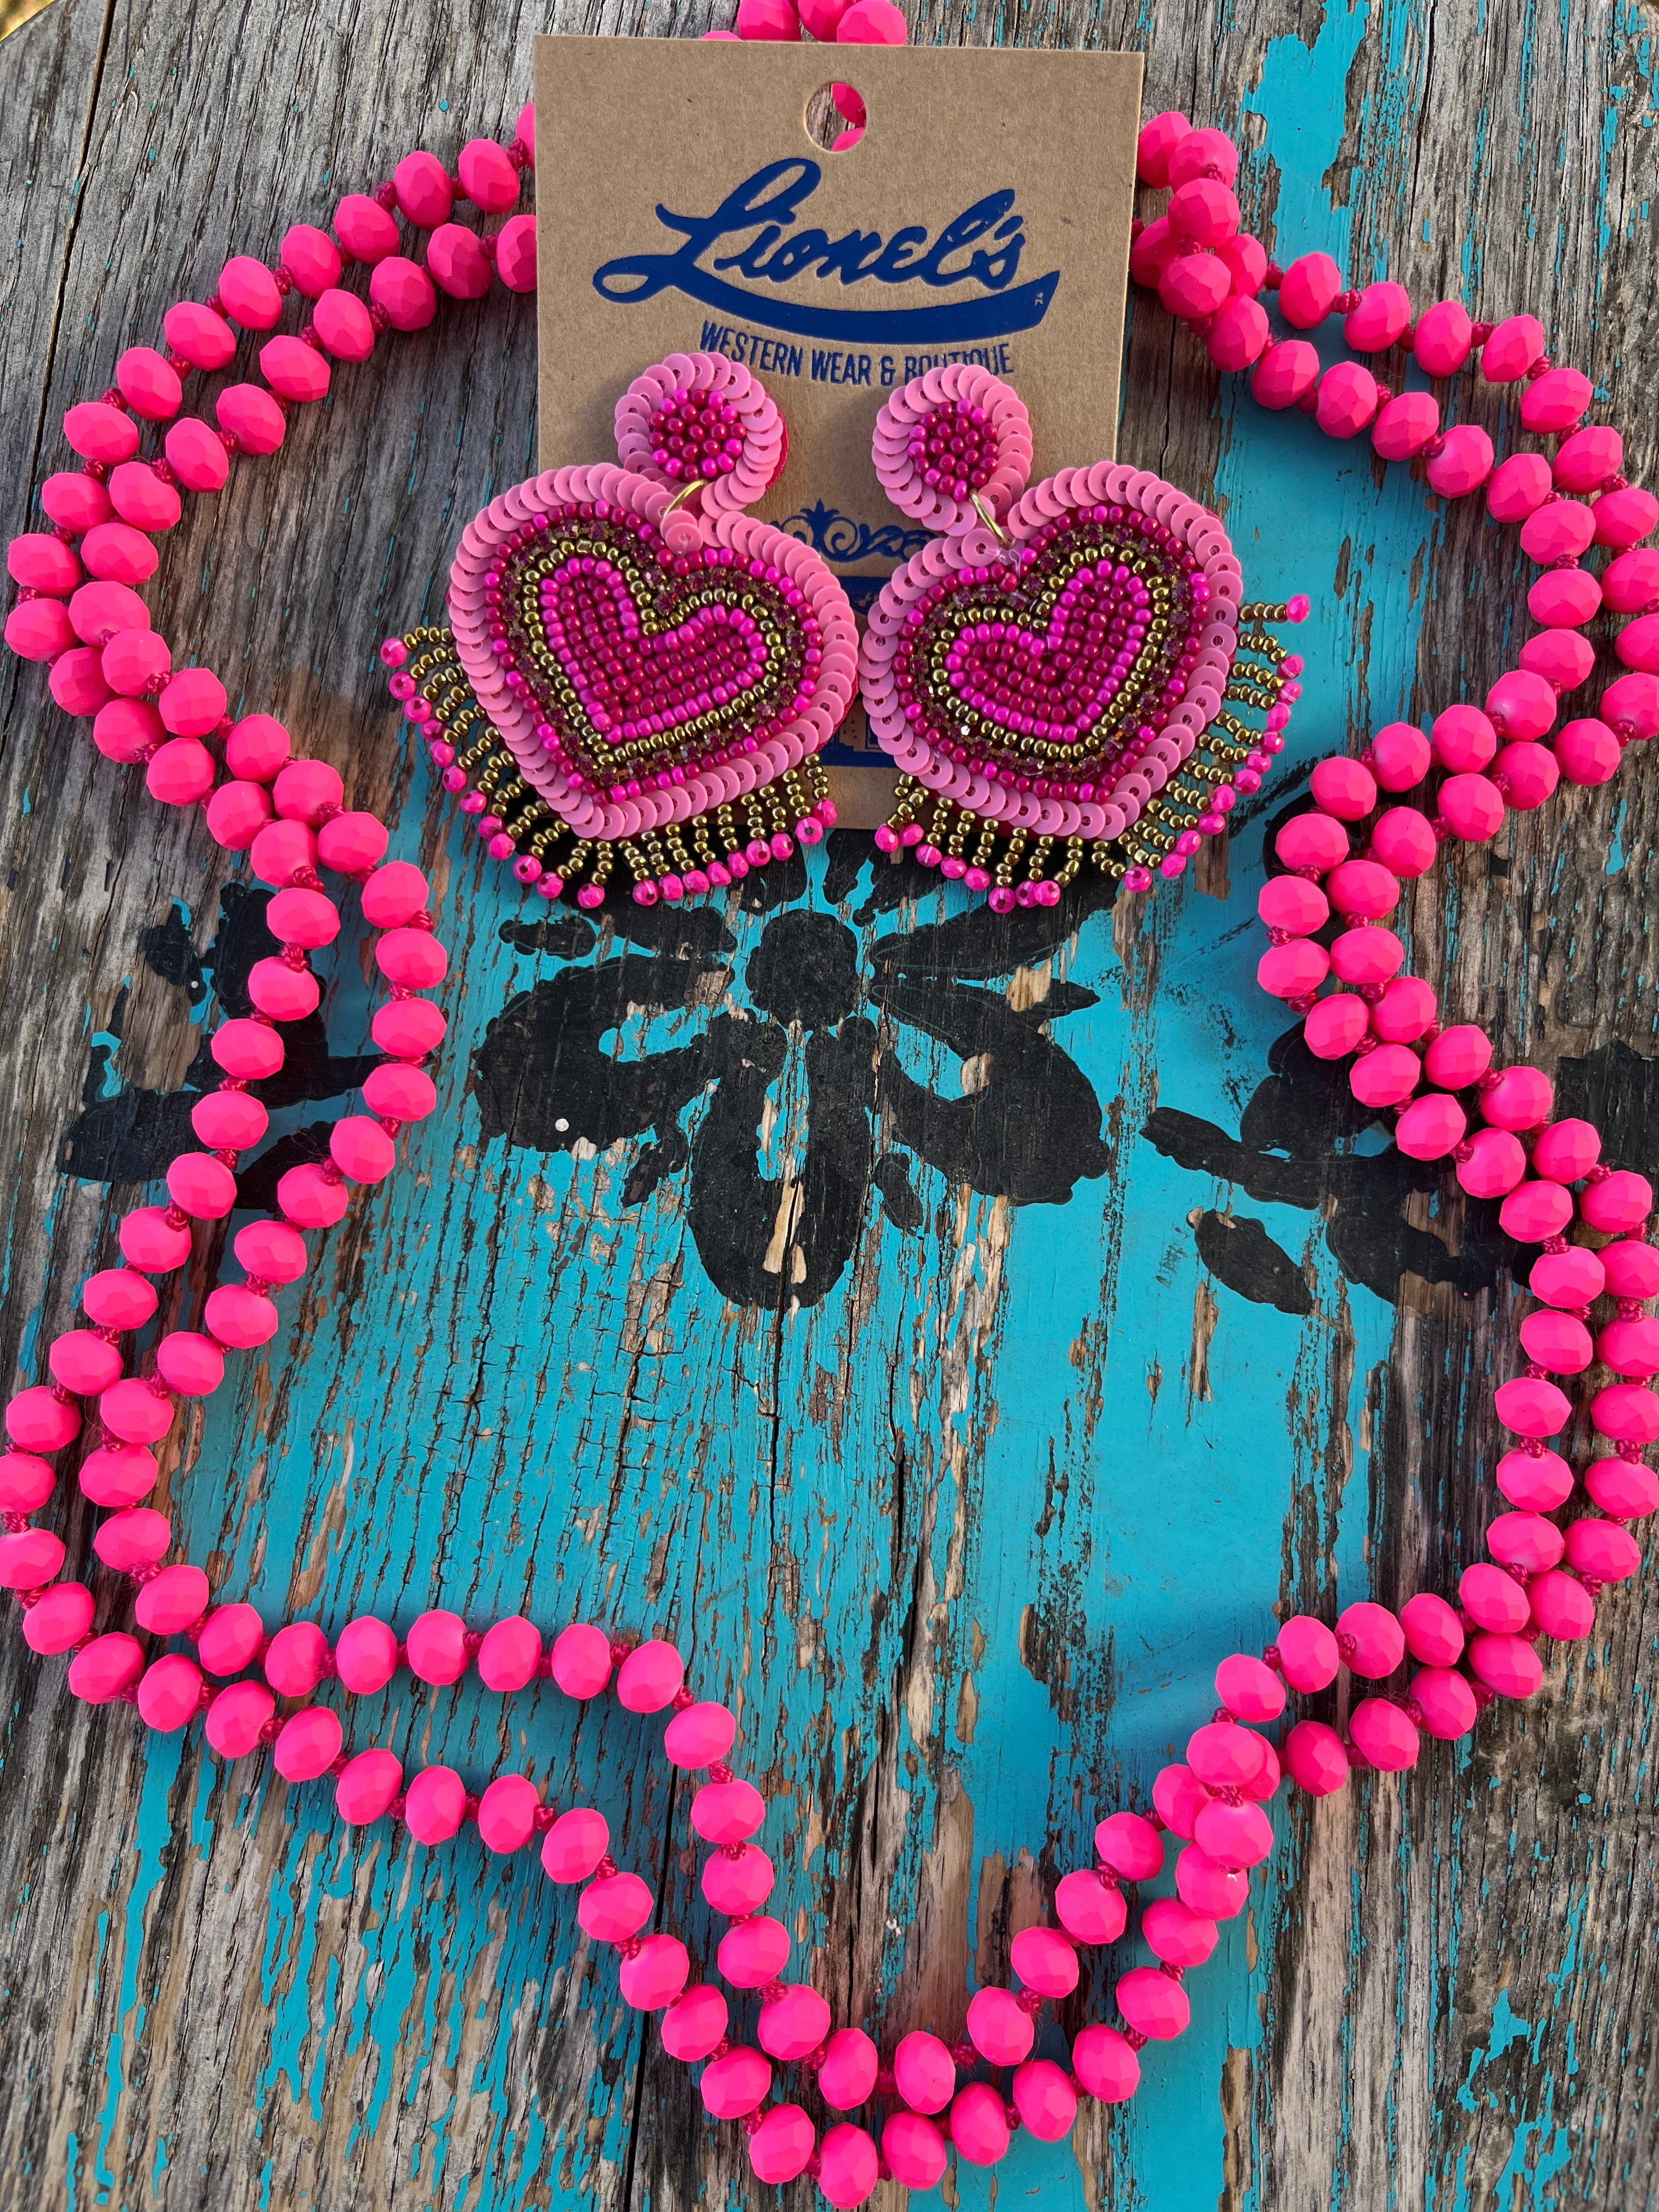 Metallic Pink Bead Necklaces 50ct | Party City